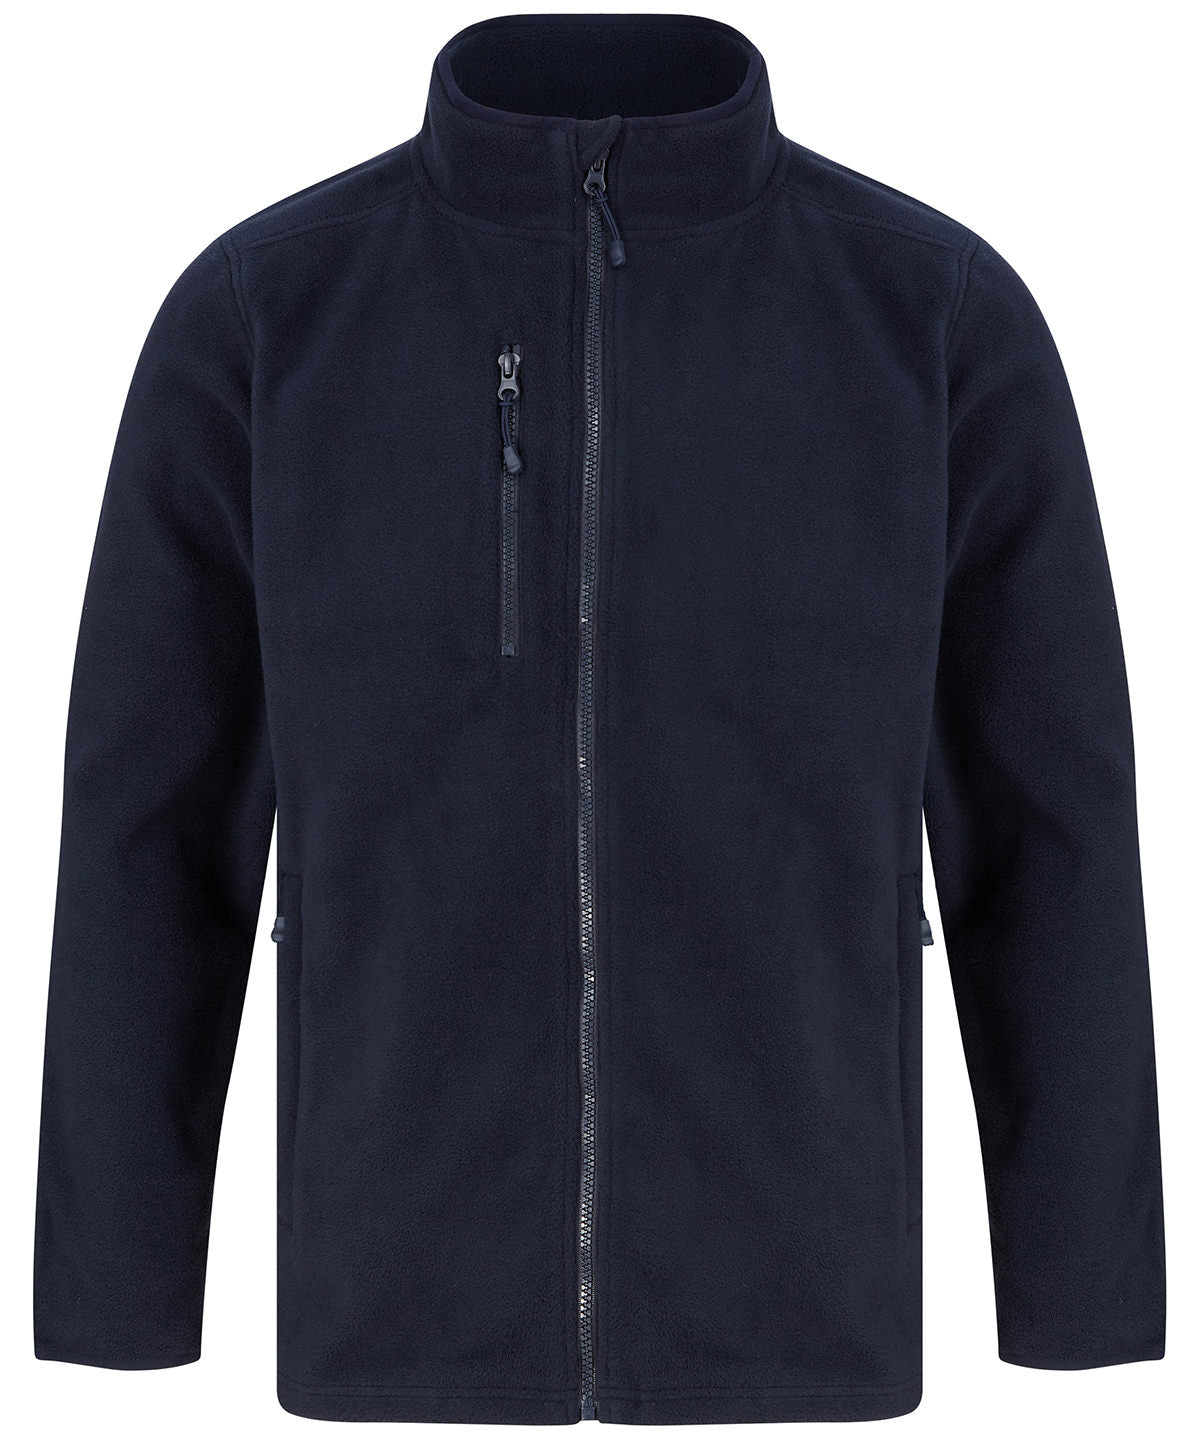 Personalised Jackets - Black Henbury Recycled polyester microfleece jacket